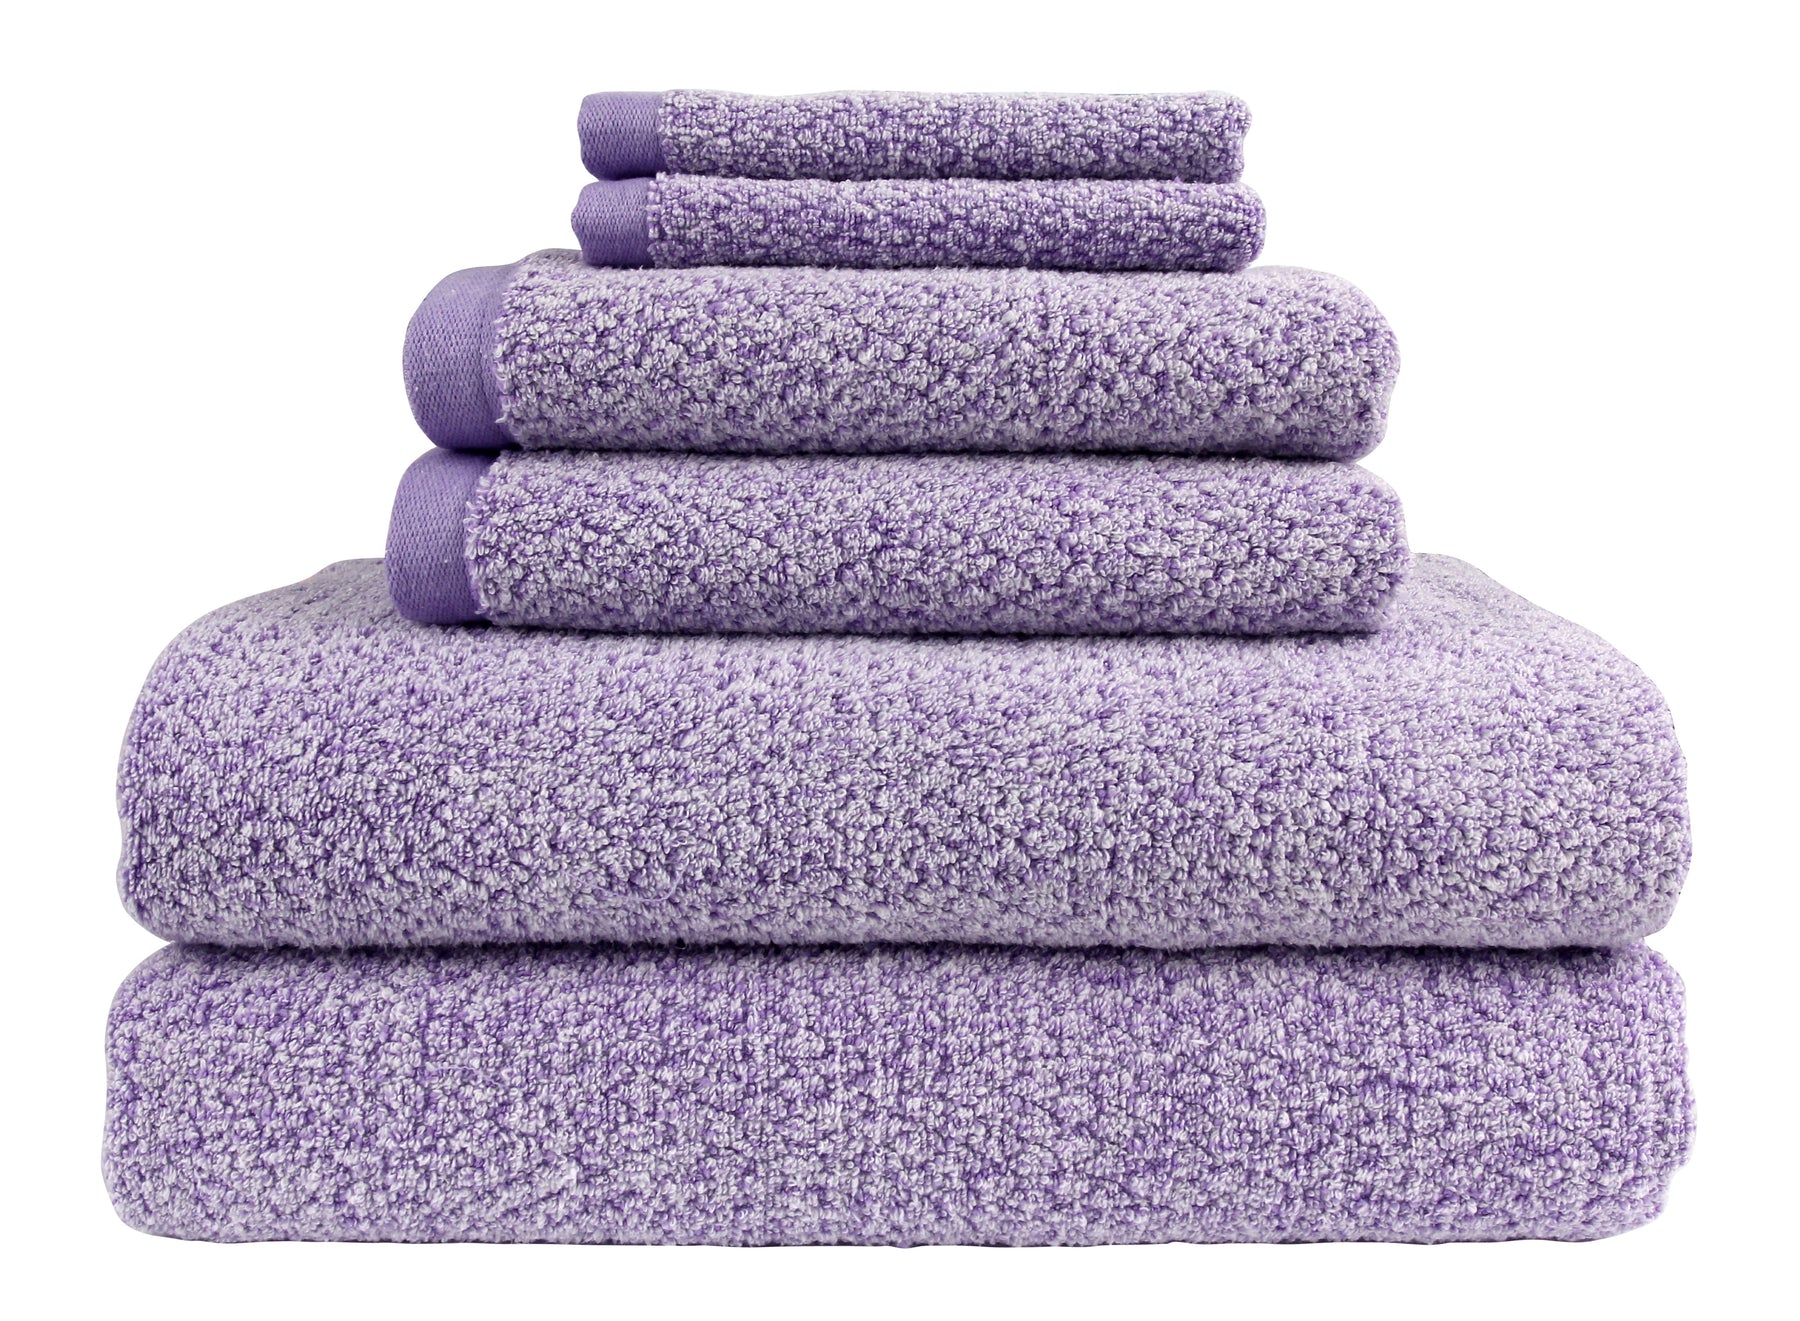 Everplush Diamond Jacquard Bath Towel Set, 2 Pack (30 x 56), Lavender 2 